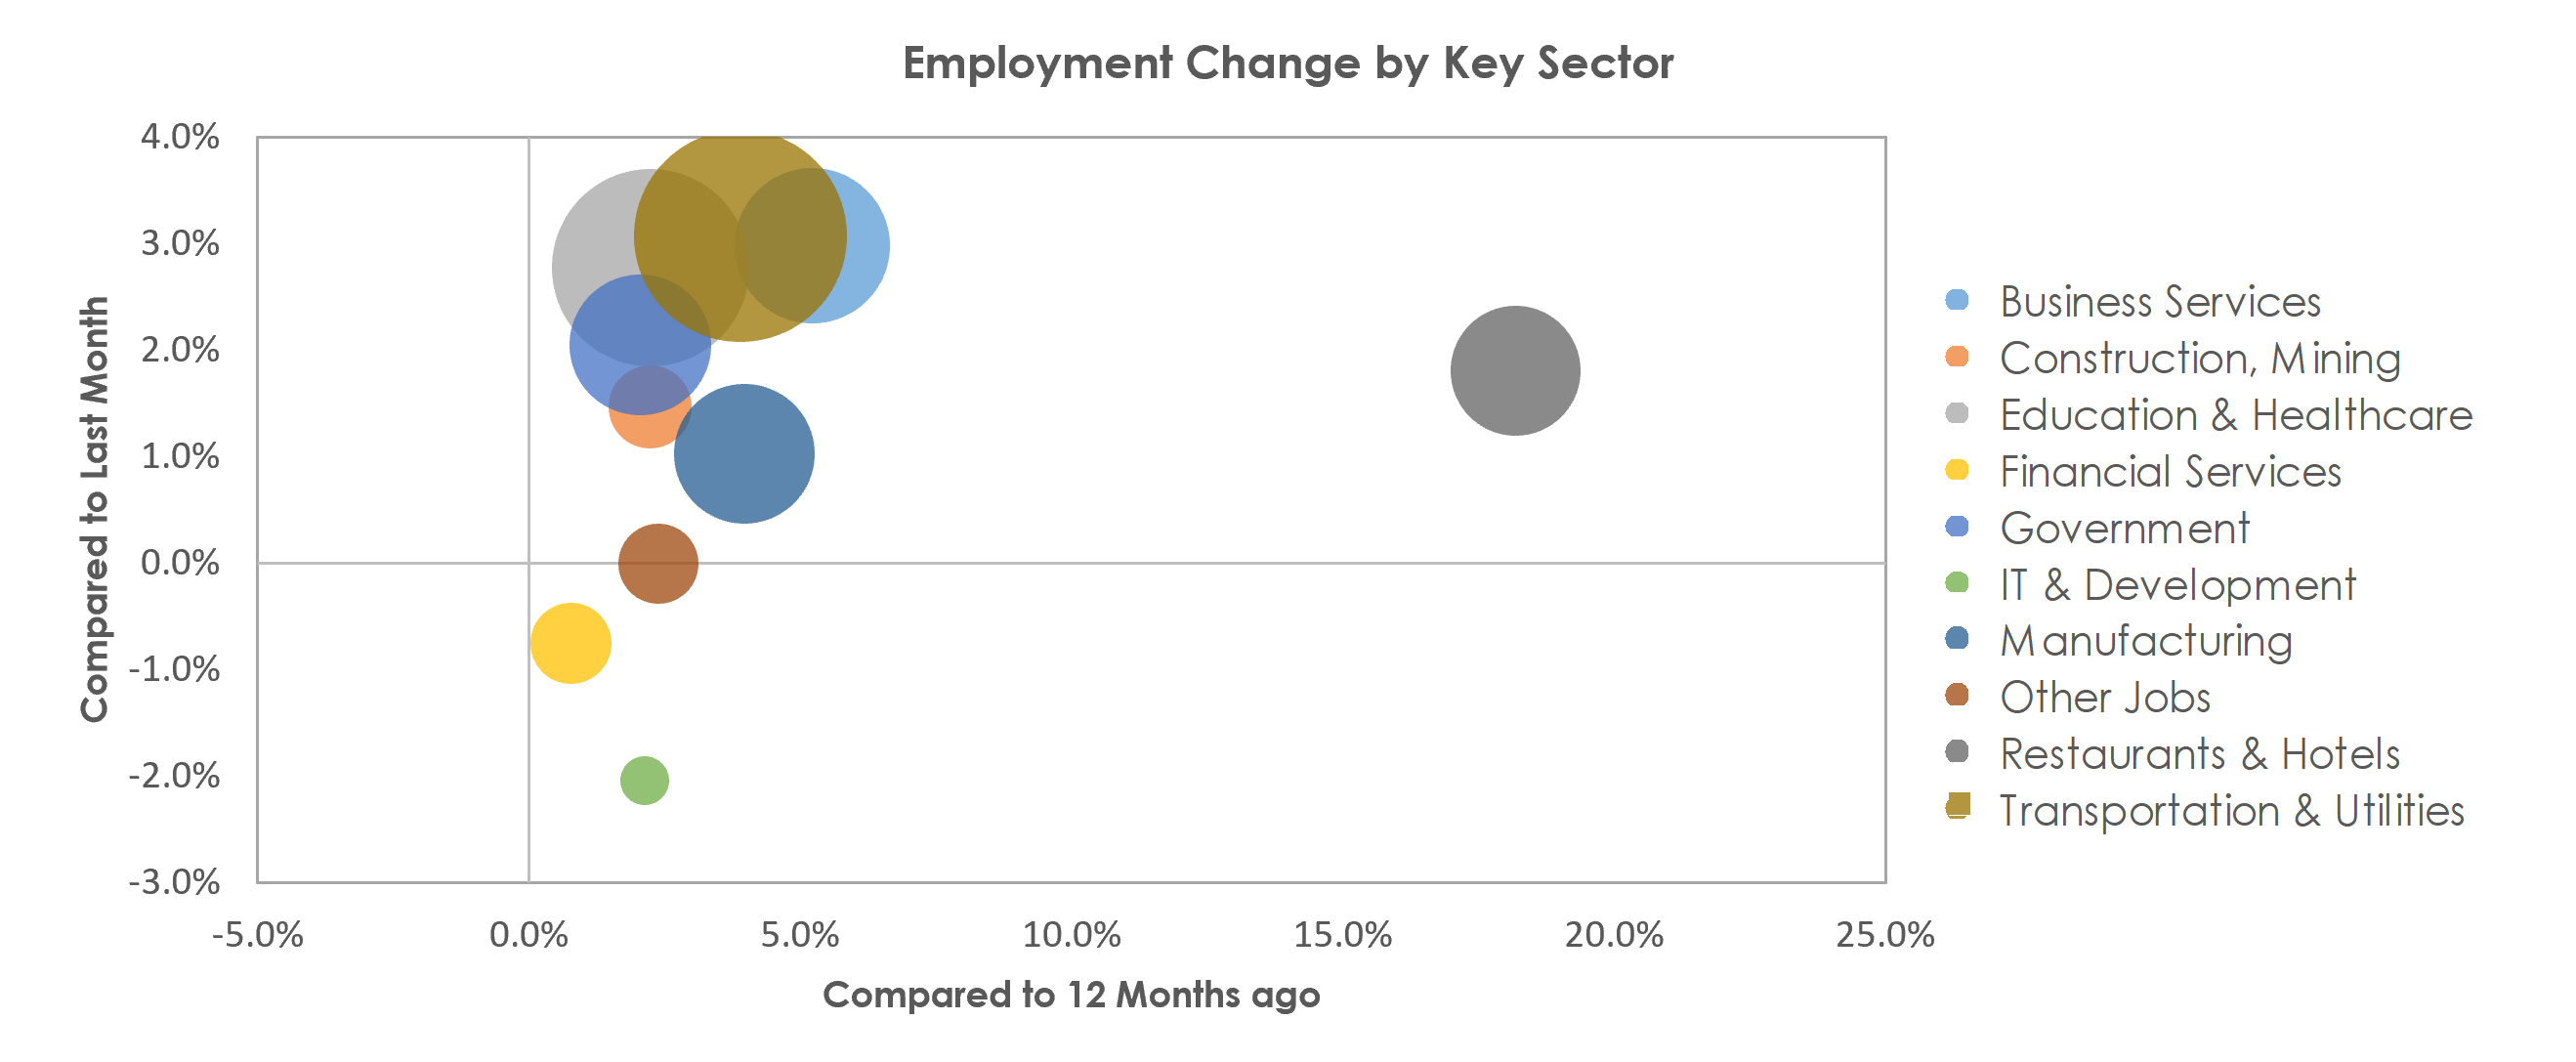 Allentown-Bethlehem-Easton, PA-NJ Unemployment by Industry October 2021